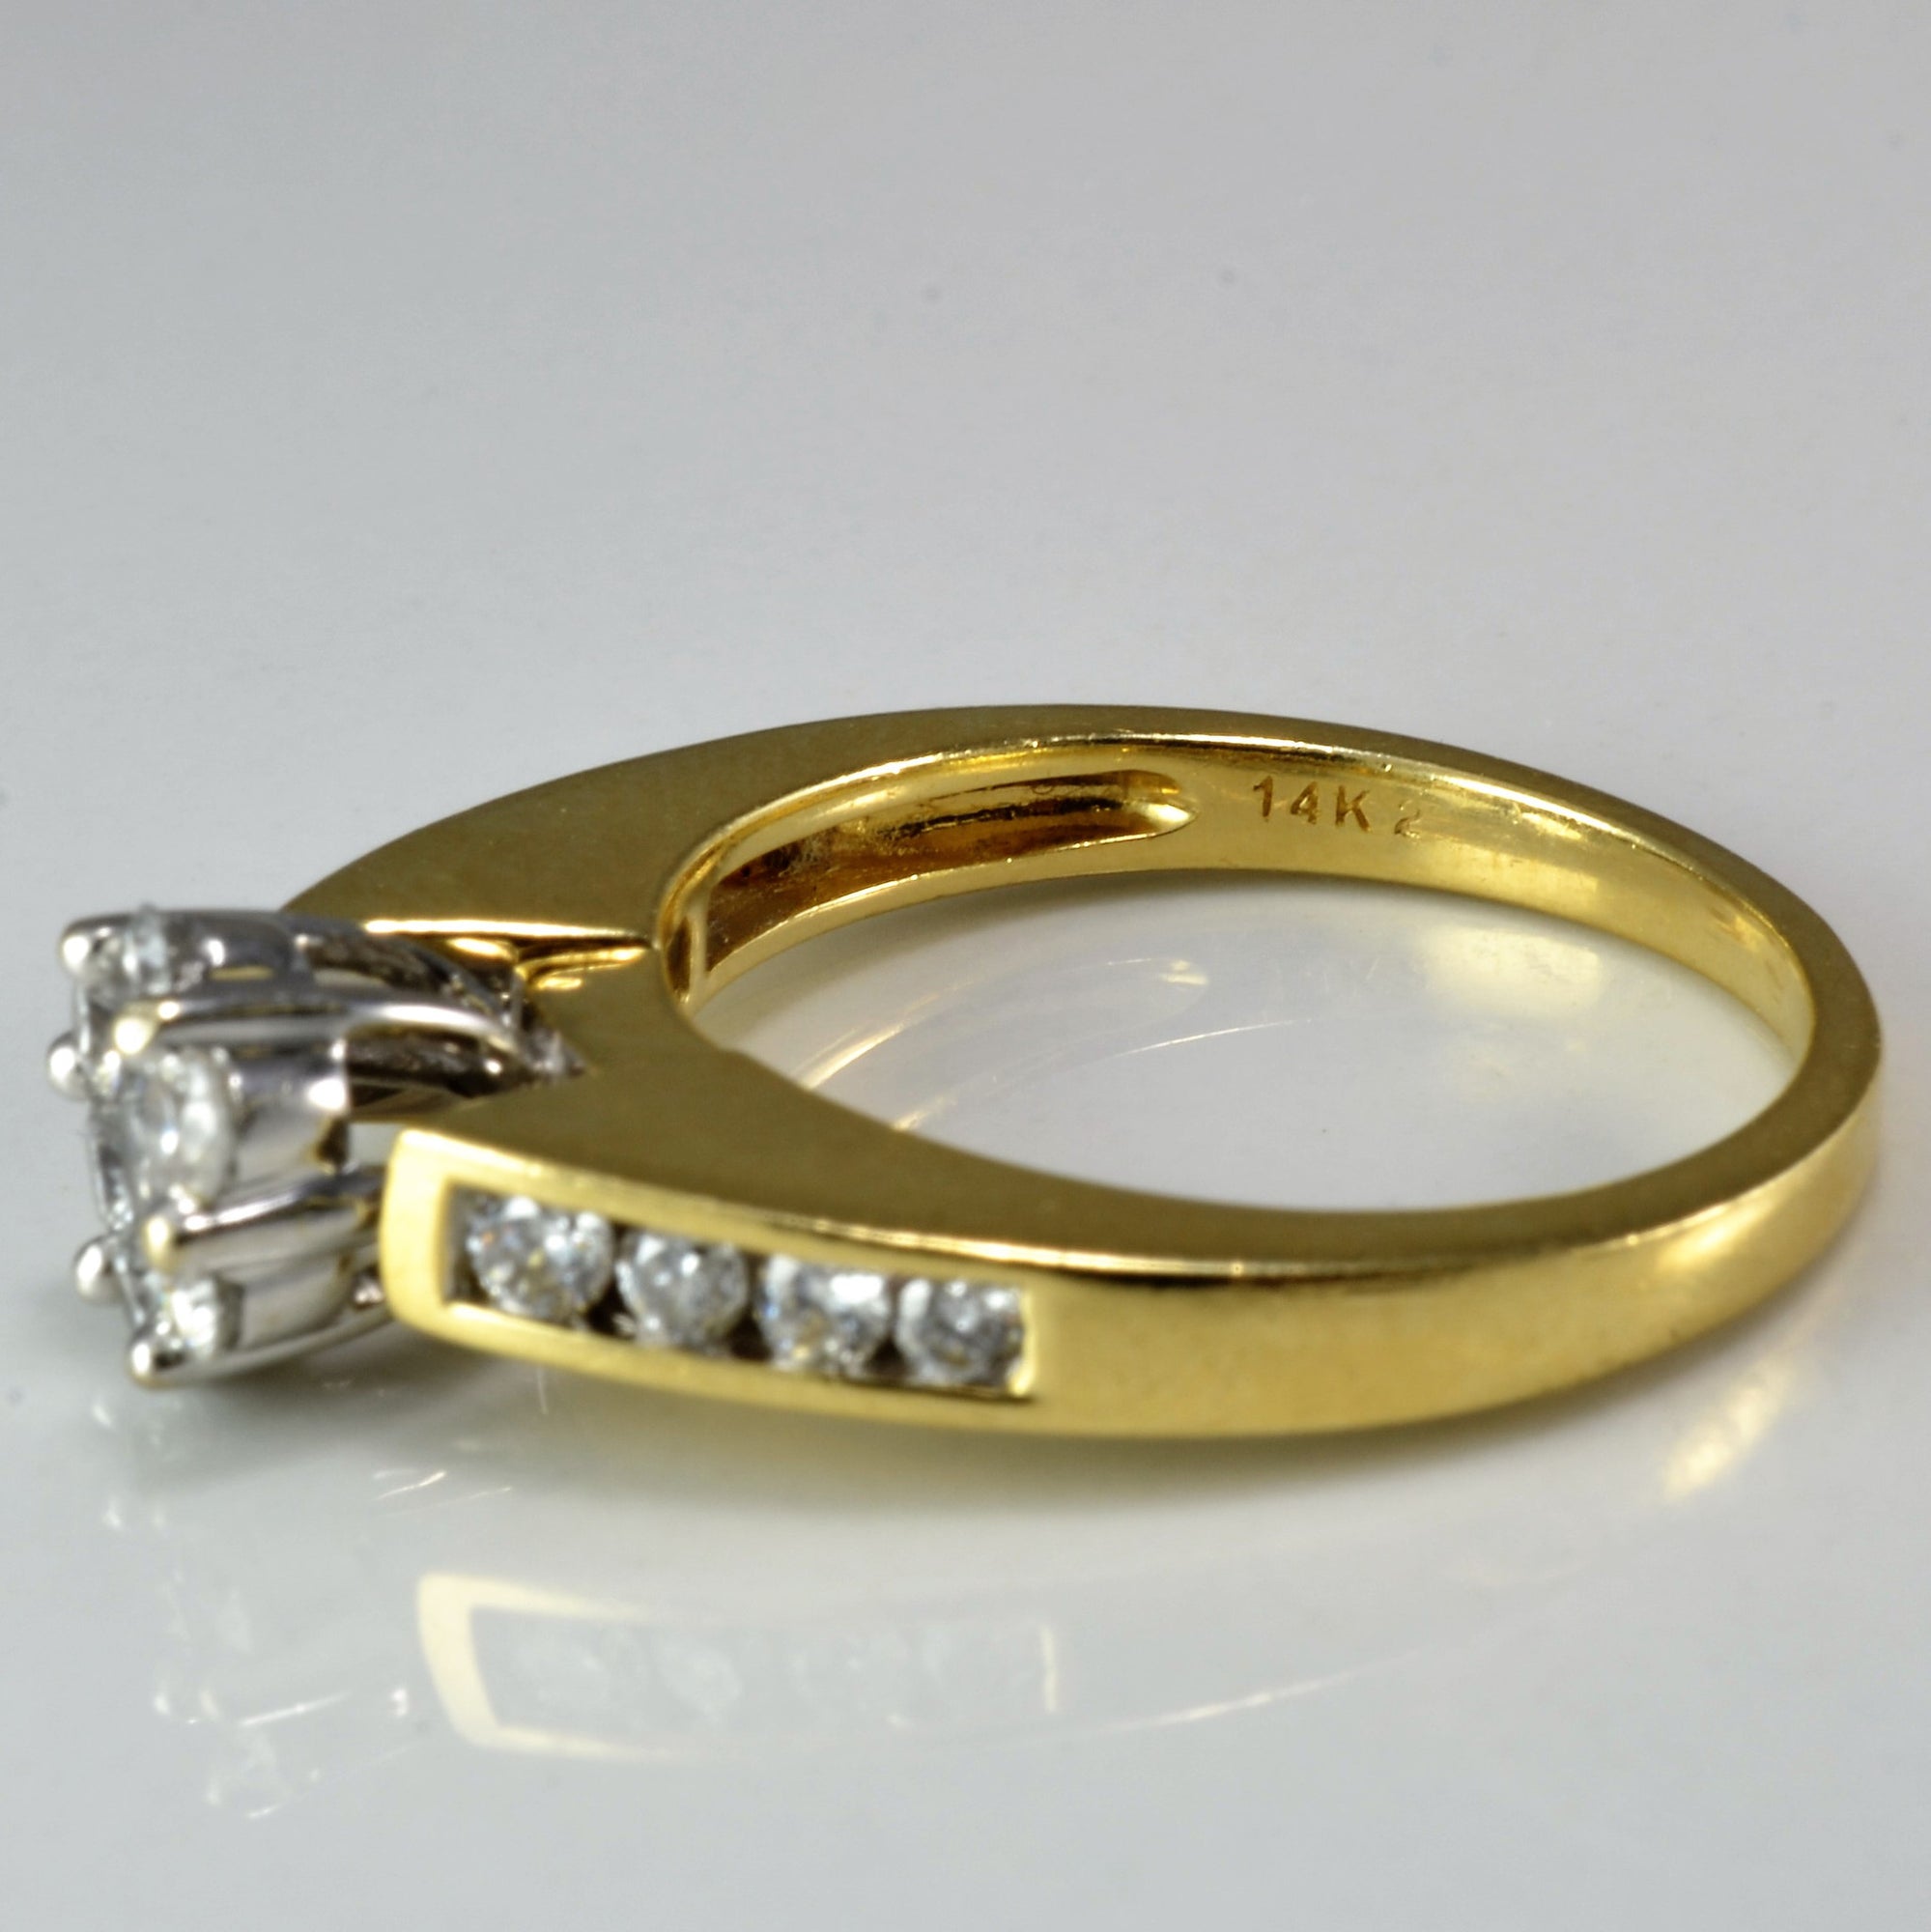 Cluster Diamond Engagement Ring | 0.55 ctw, SZ 7 |